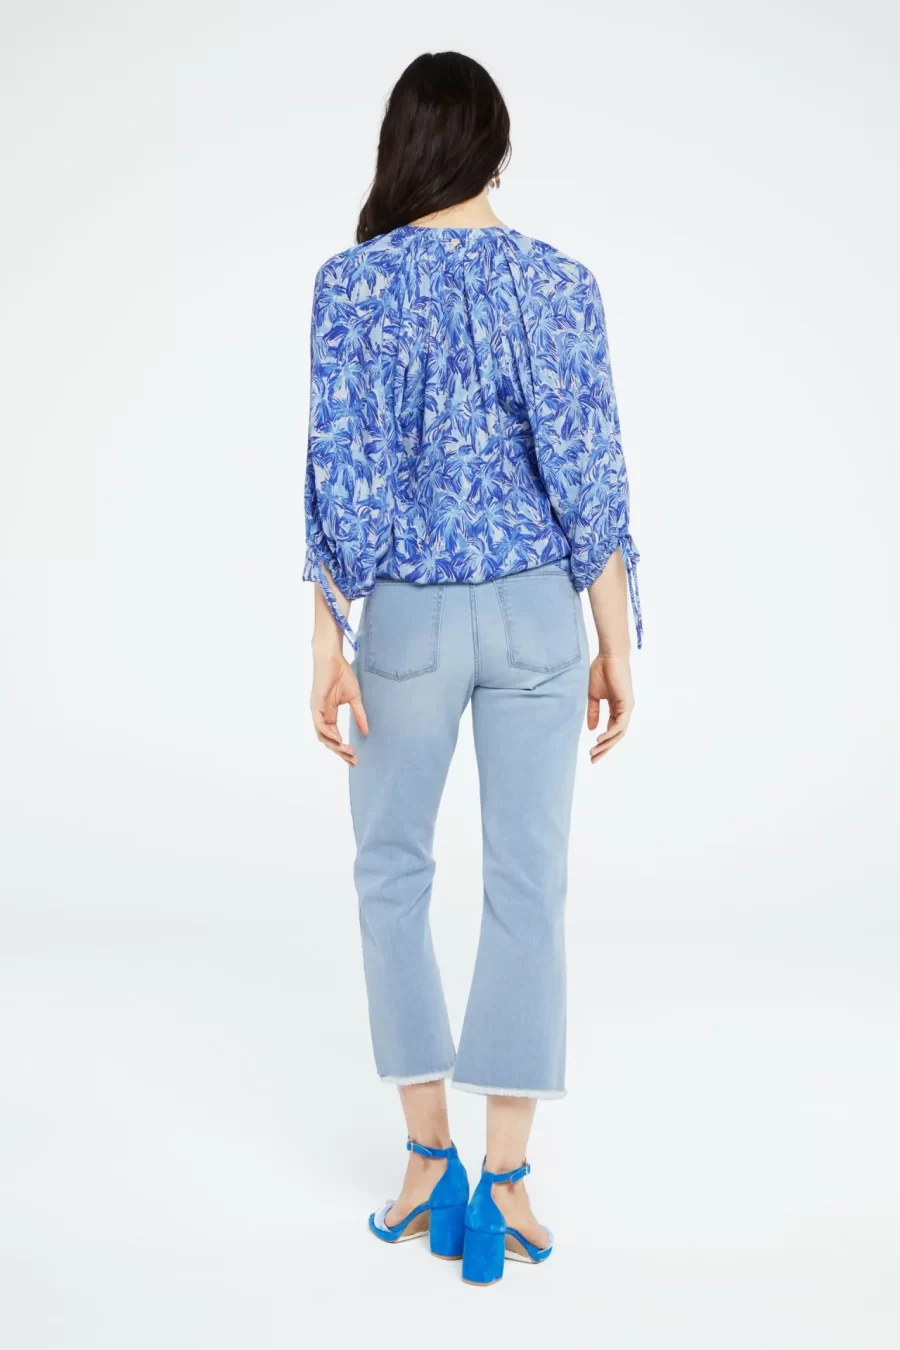 FABIENNE CHAPOT Cooper blouse POOL BLUE CARIBBEAN Palm print Top Boho